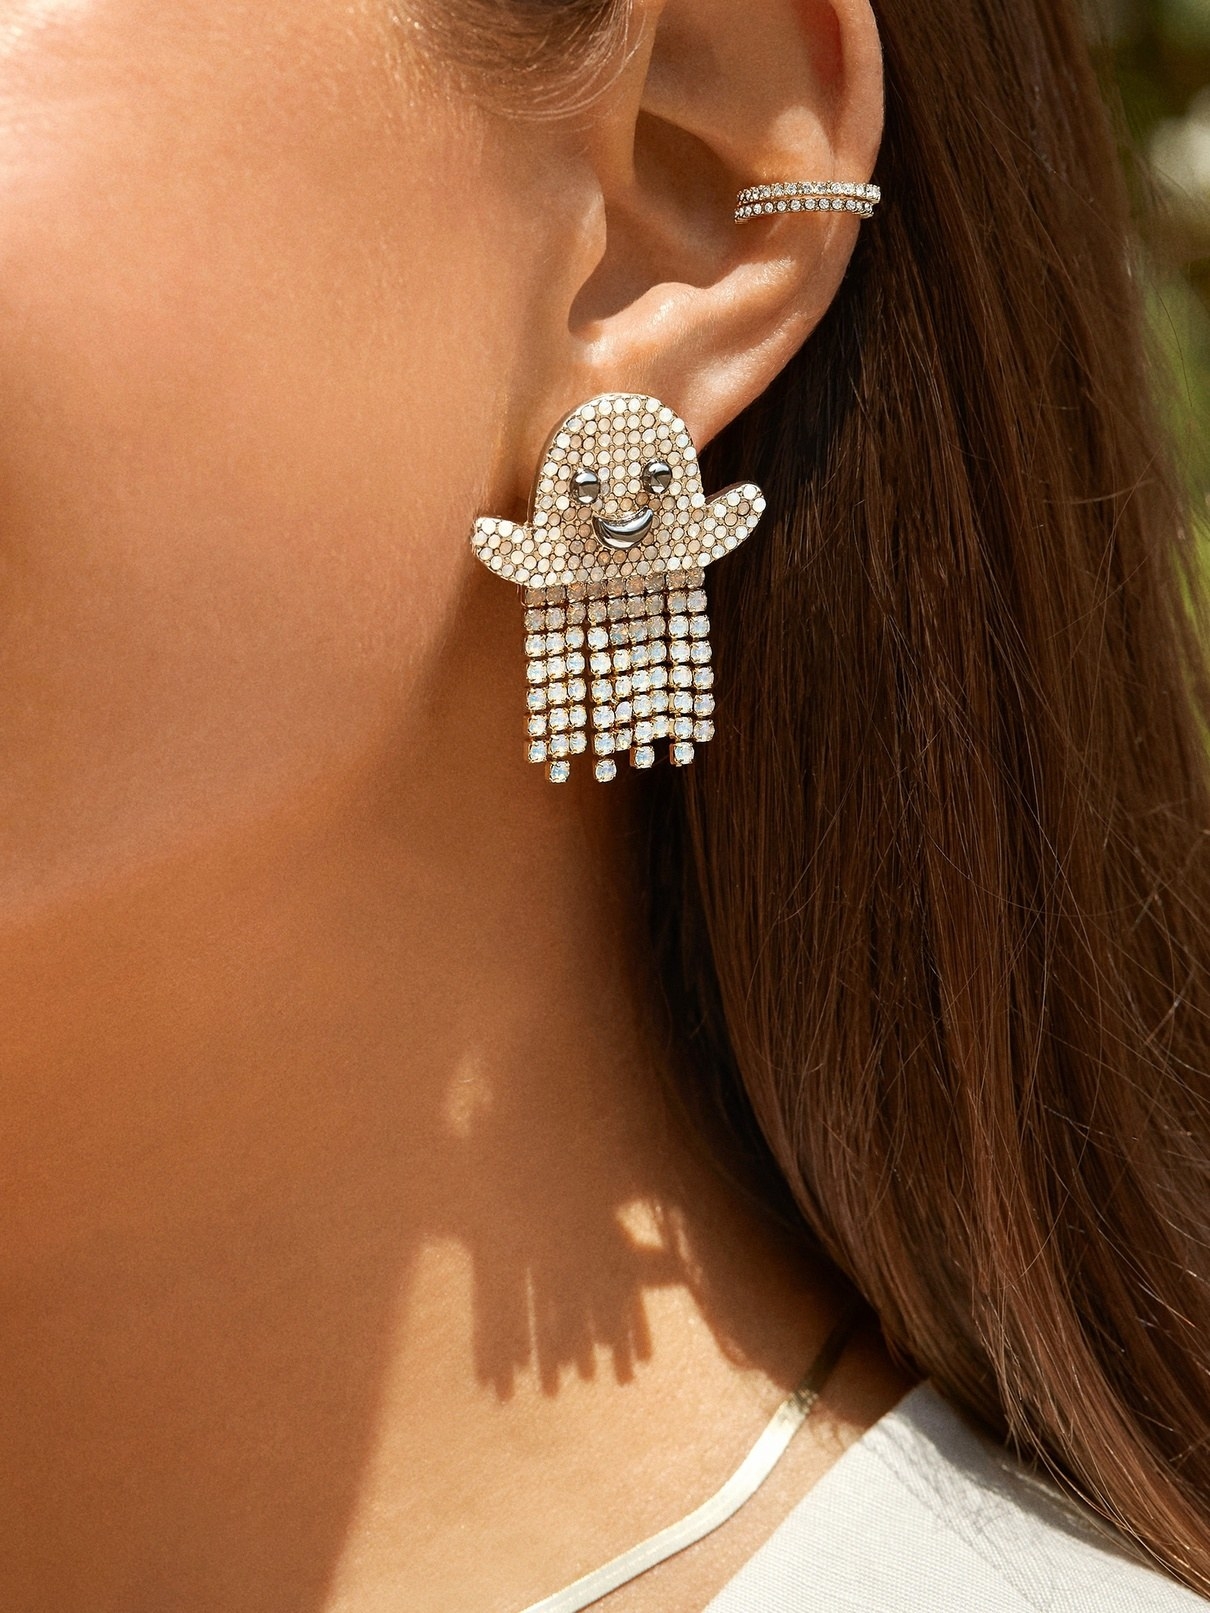 model wearing the ghost earrings with a cuff earring